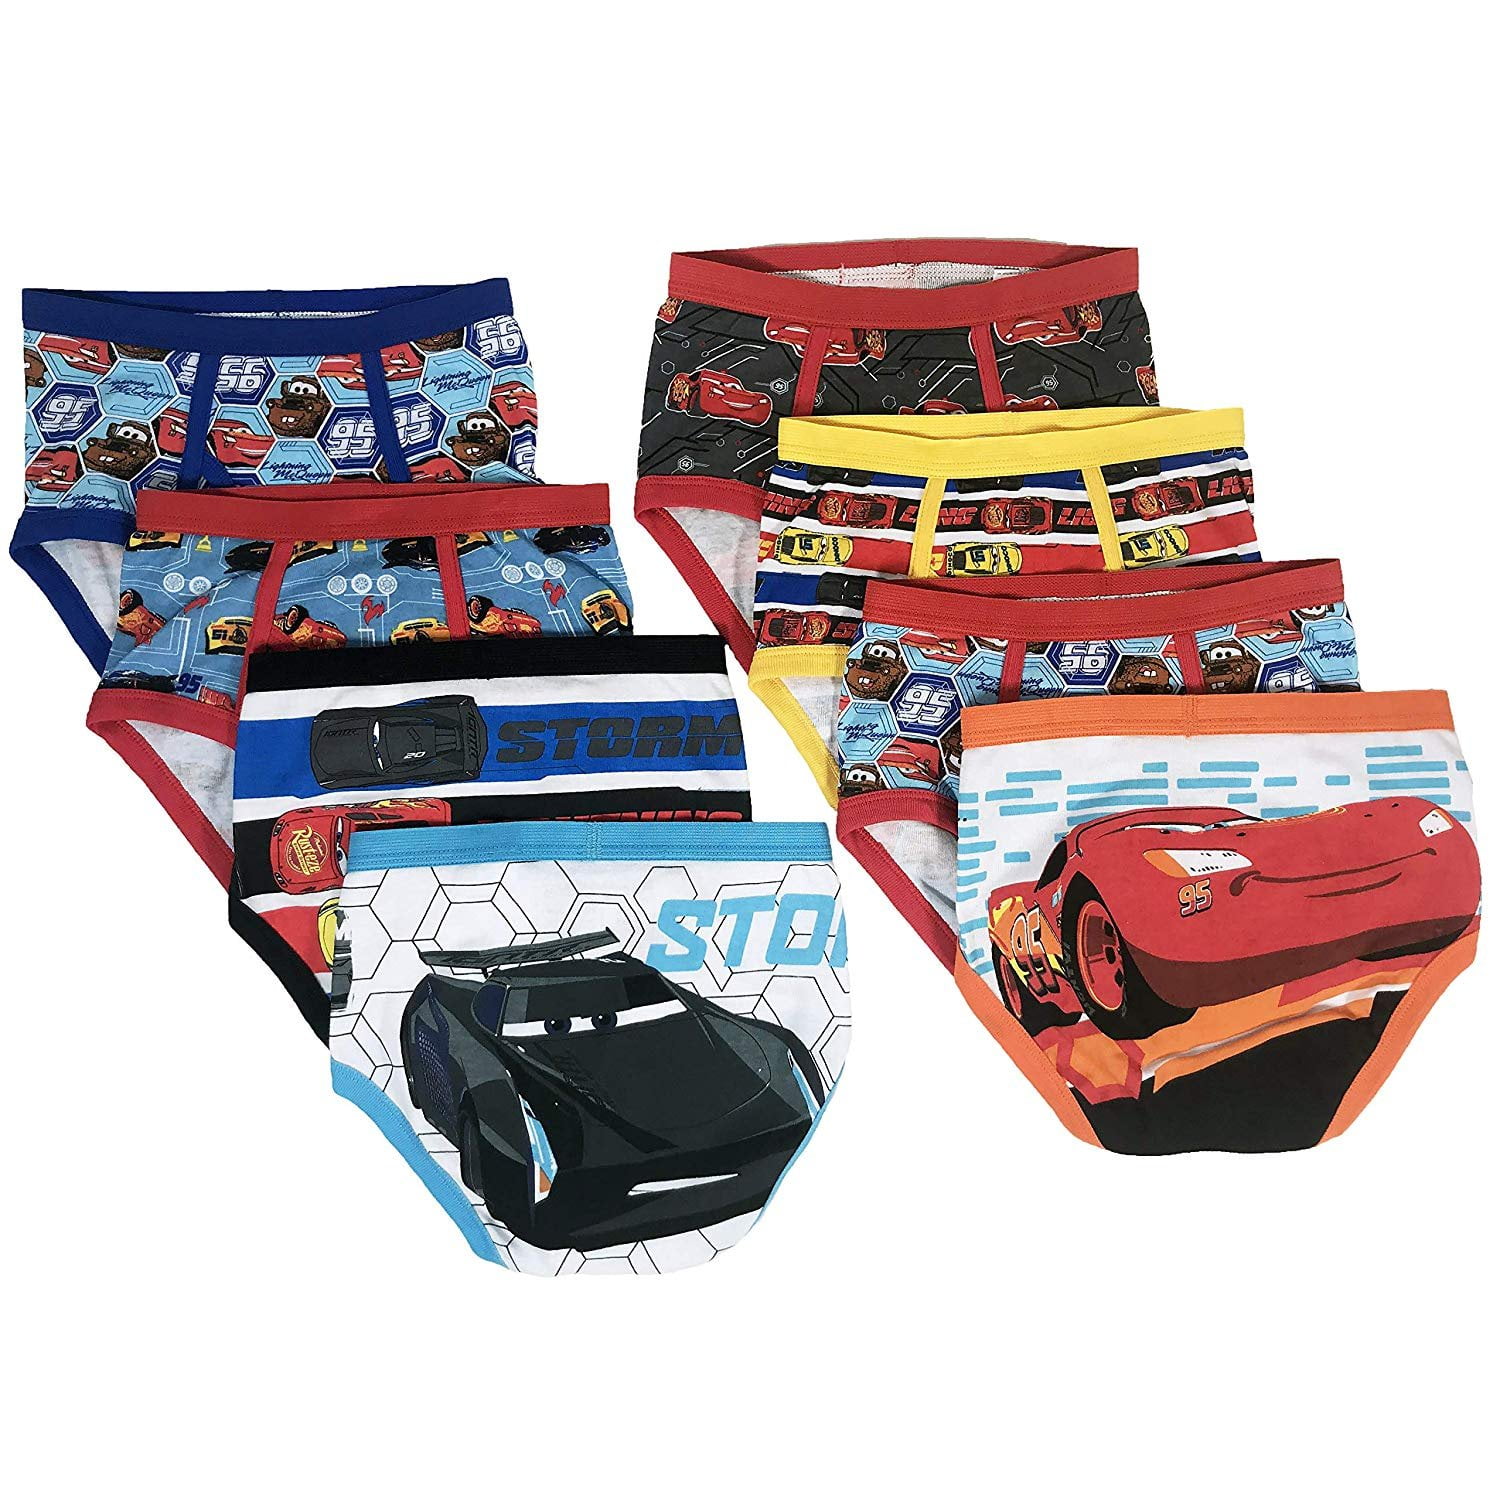 Handcraft Mfg Disney Cars 3 Boys Underwear 8Pack